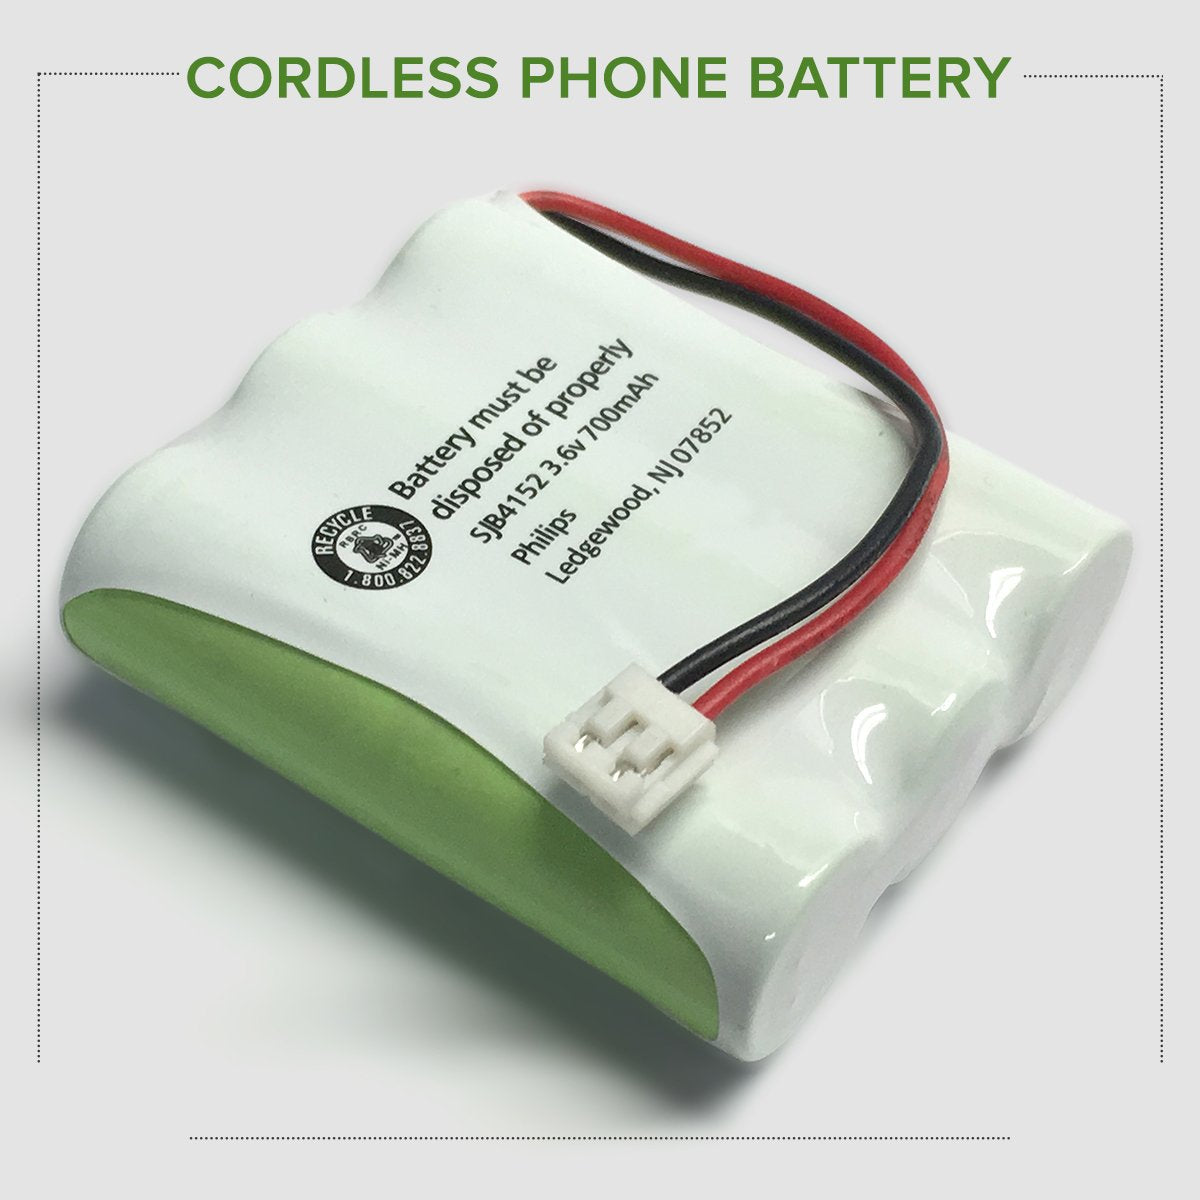 Sony SPP-961 Cordless Phone Battery